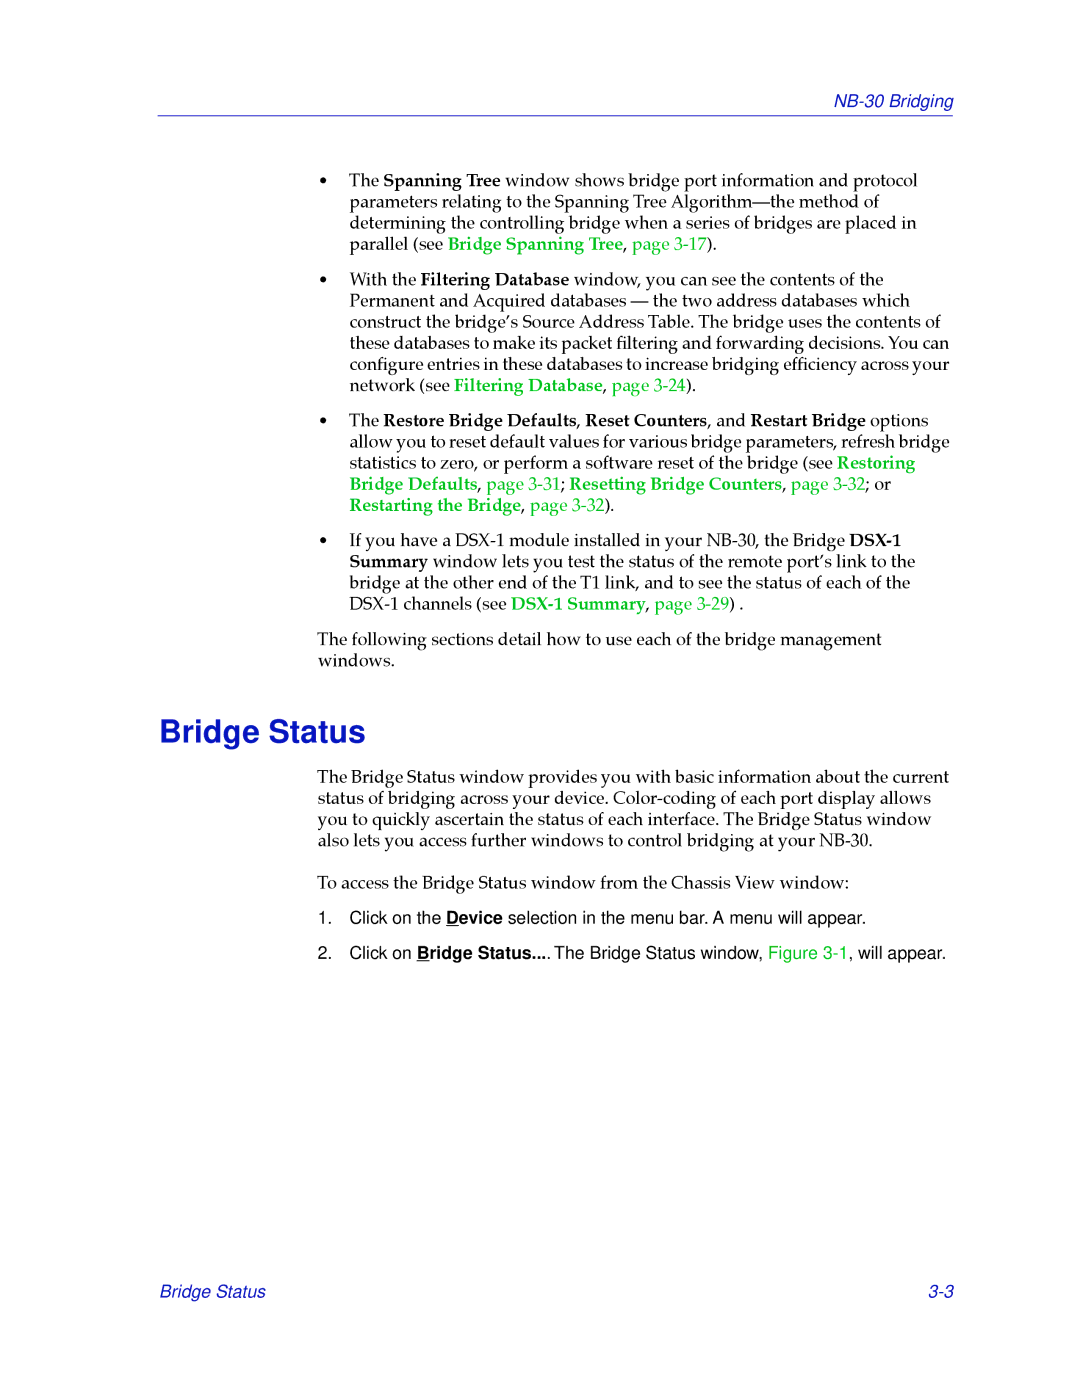 Cabletron Systems NB30 manual Bridge Status 